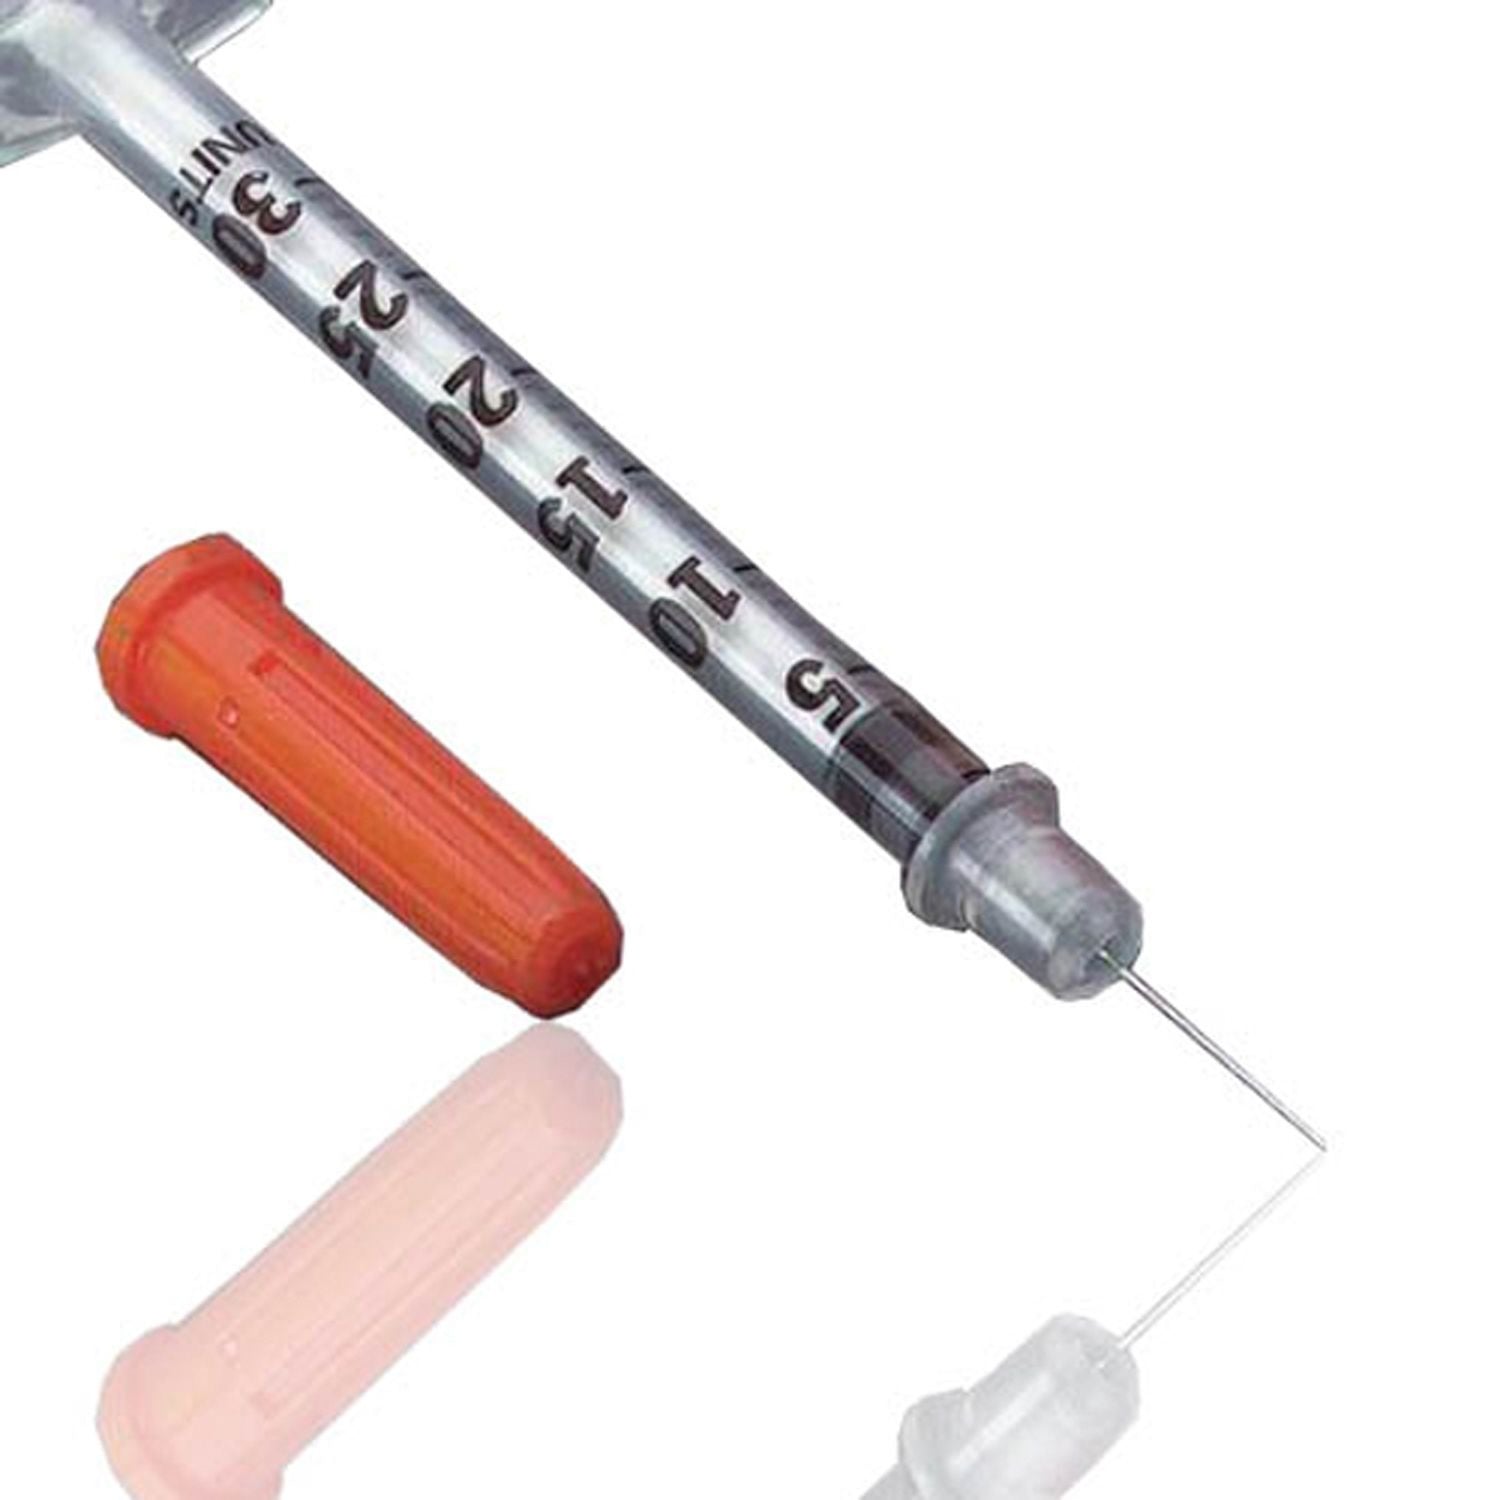 BD Microfine Insulin Syringe | 29G x 0.5ml | Pack of 200 (1)